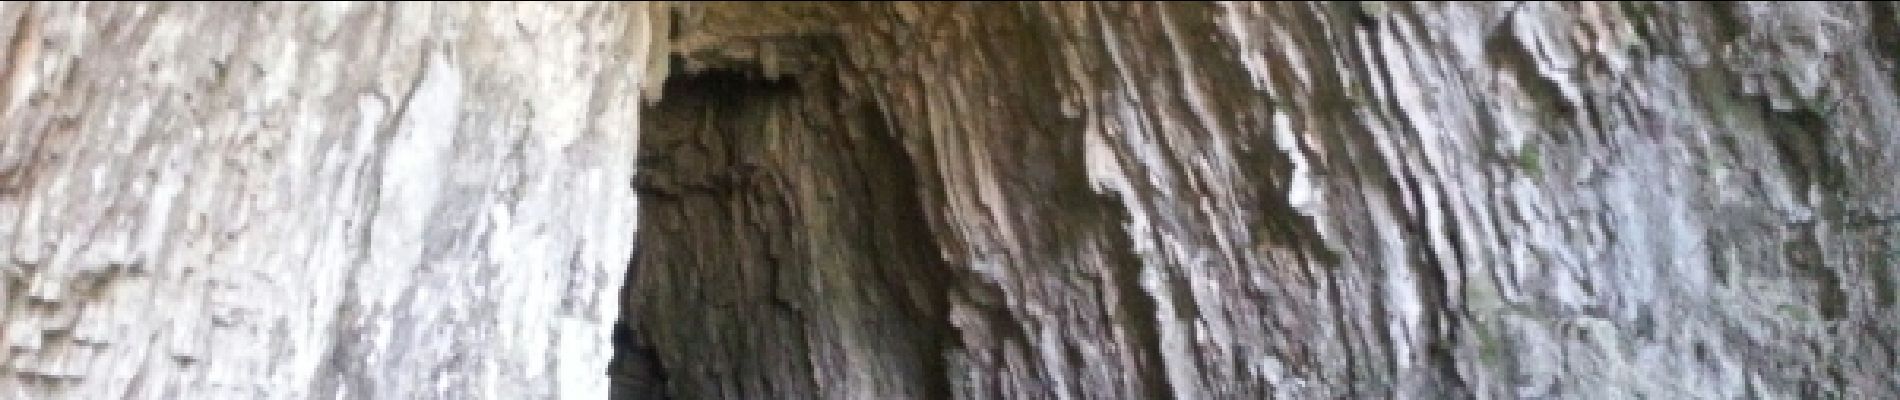 Trail Running Chamesol - grotte du château des roches - Photo